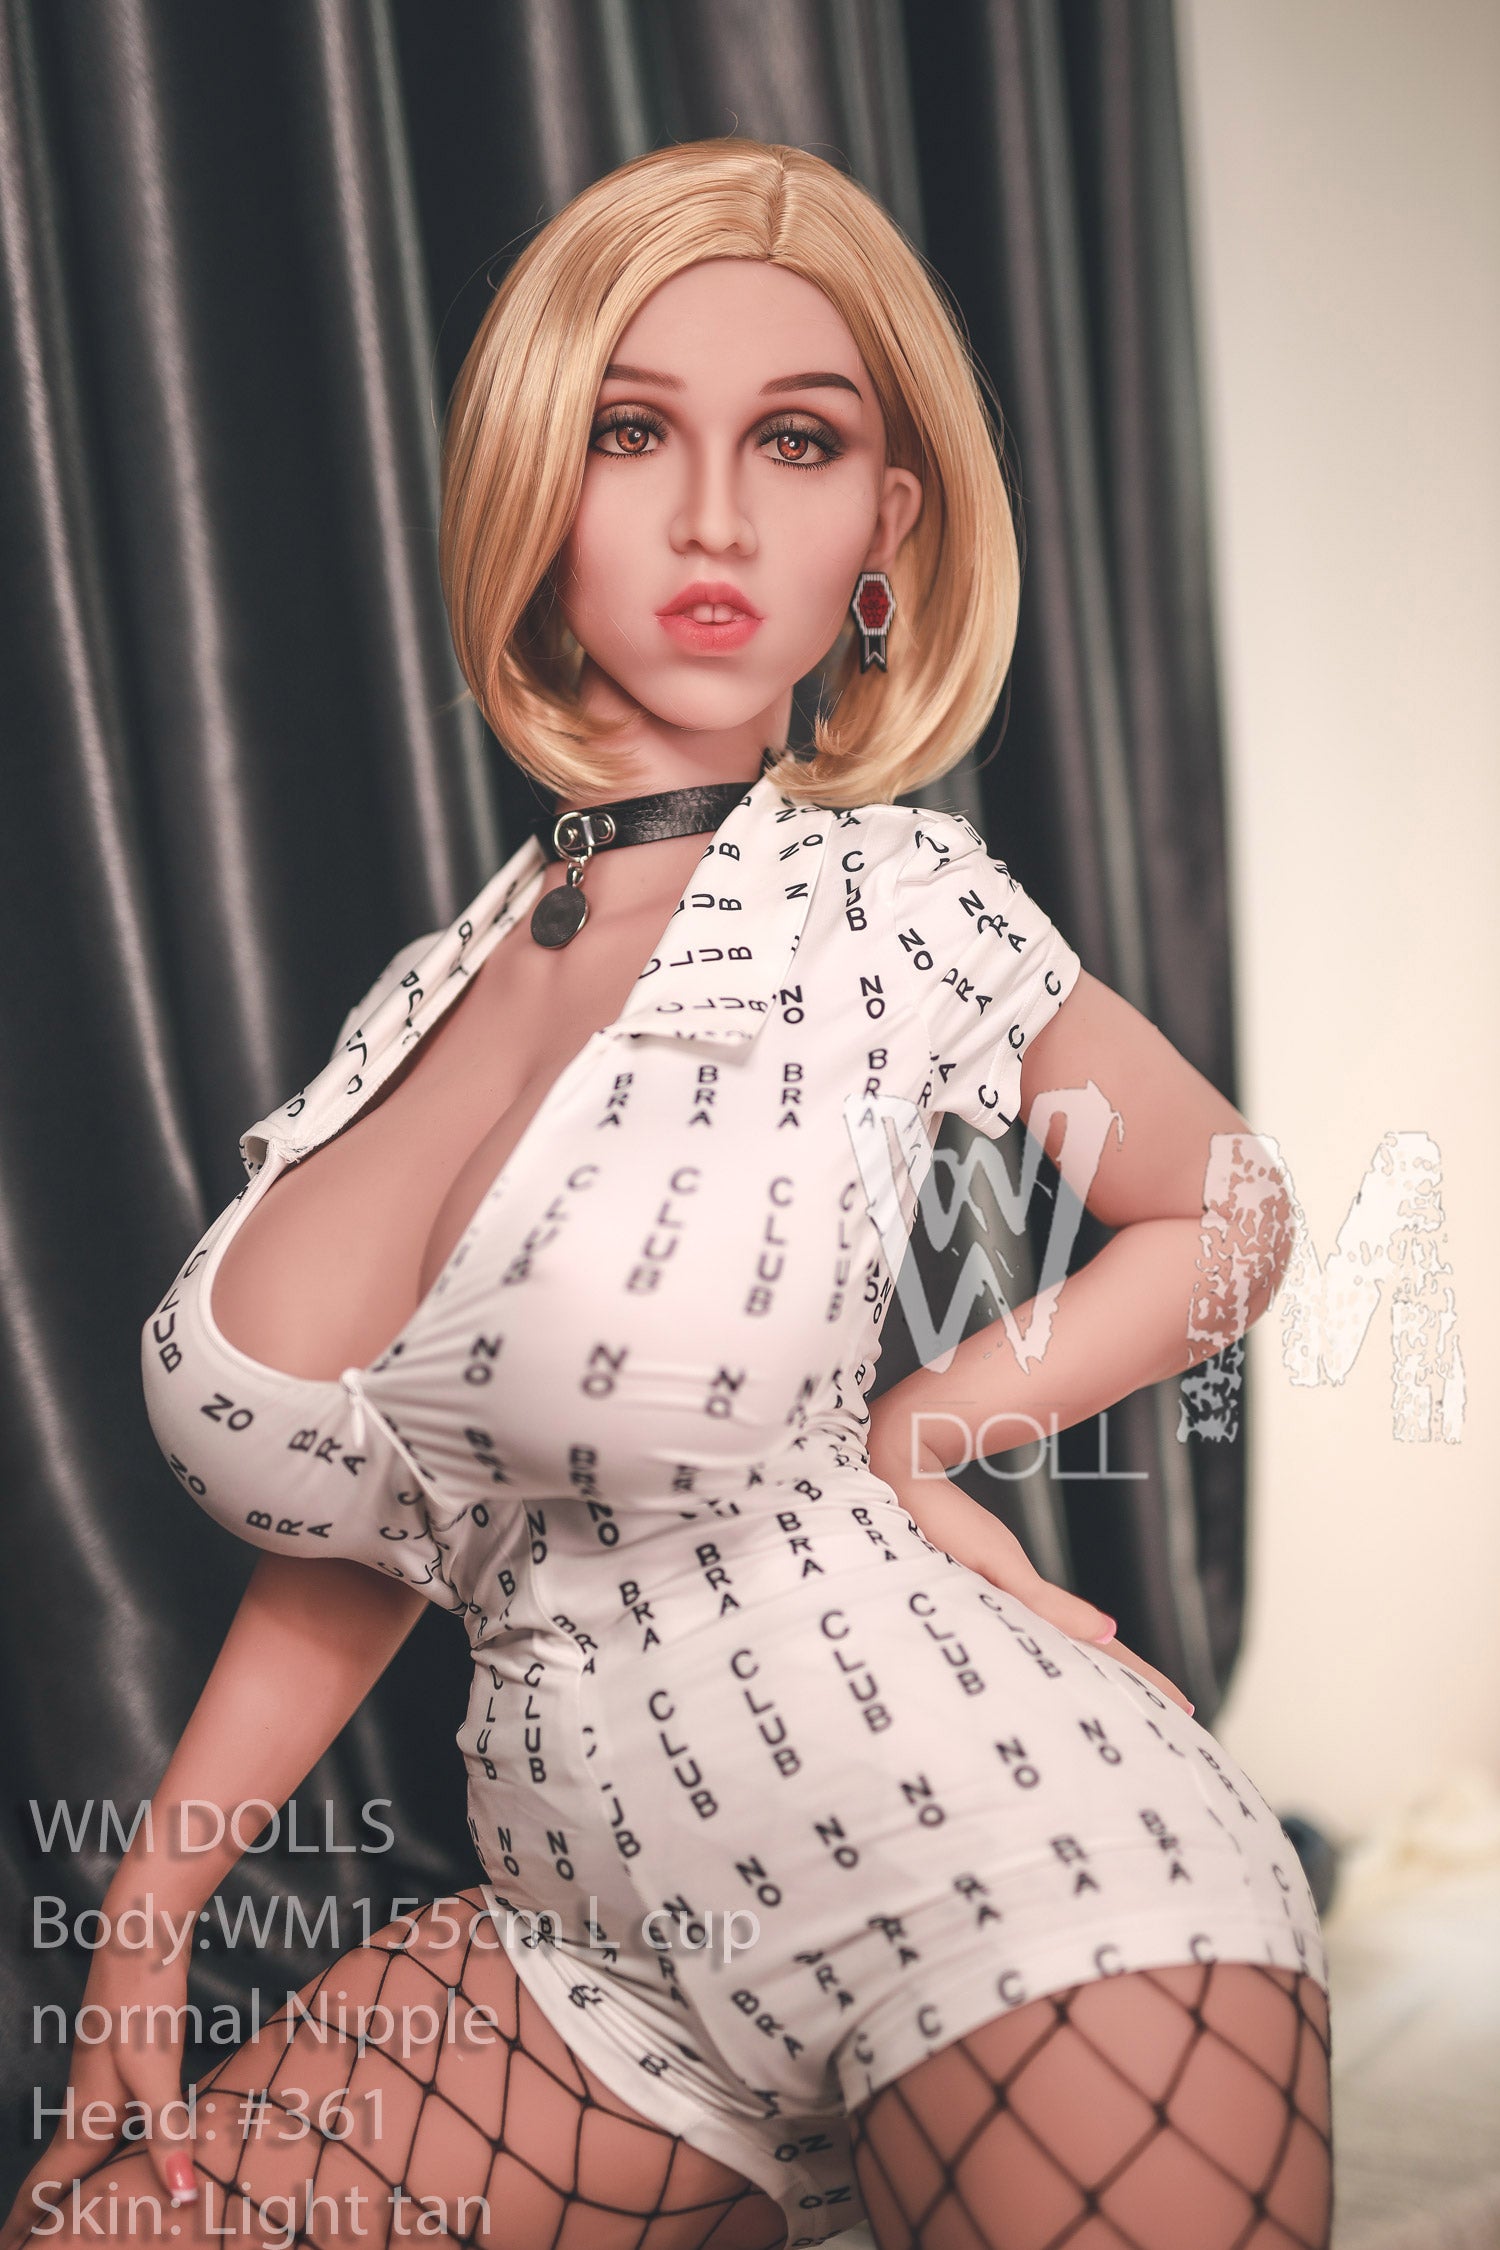 WM DOLL 155 CM L TPE - Olivia | Buy Sex Dolls at DOLLS ACTUALLY